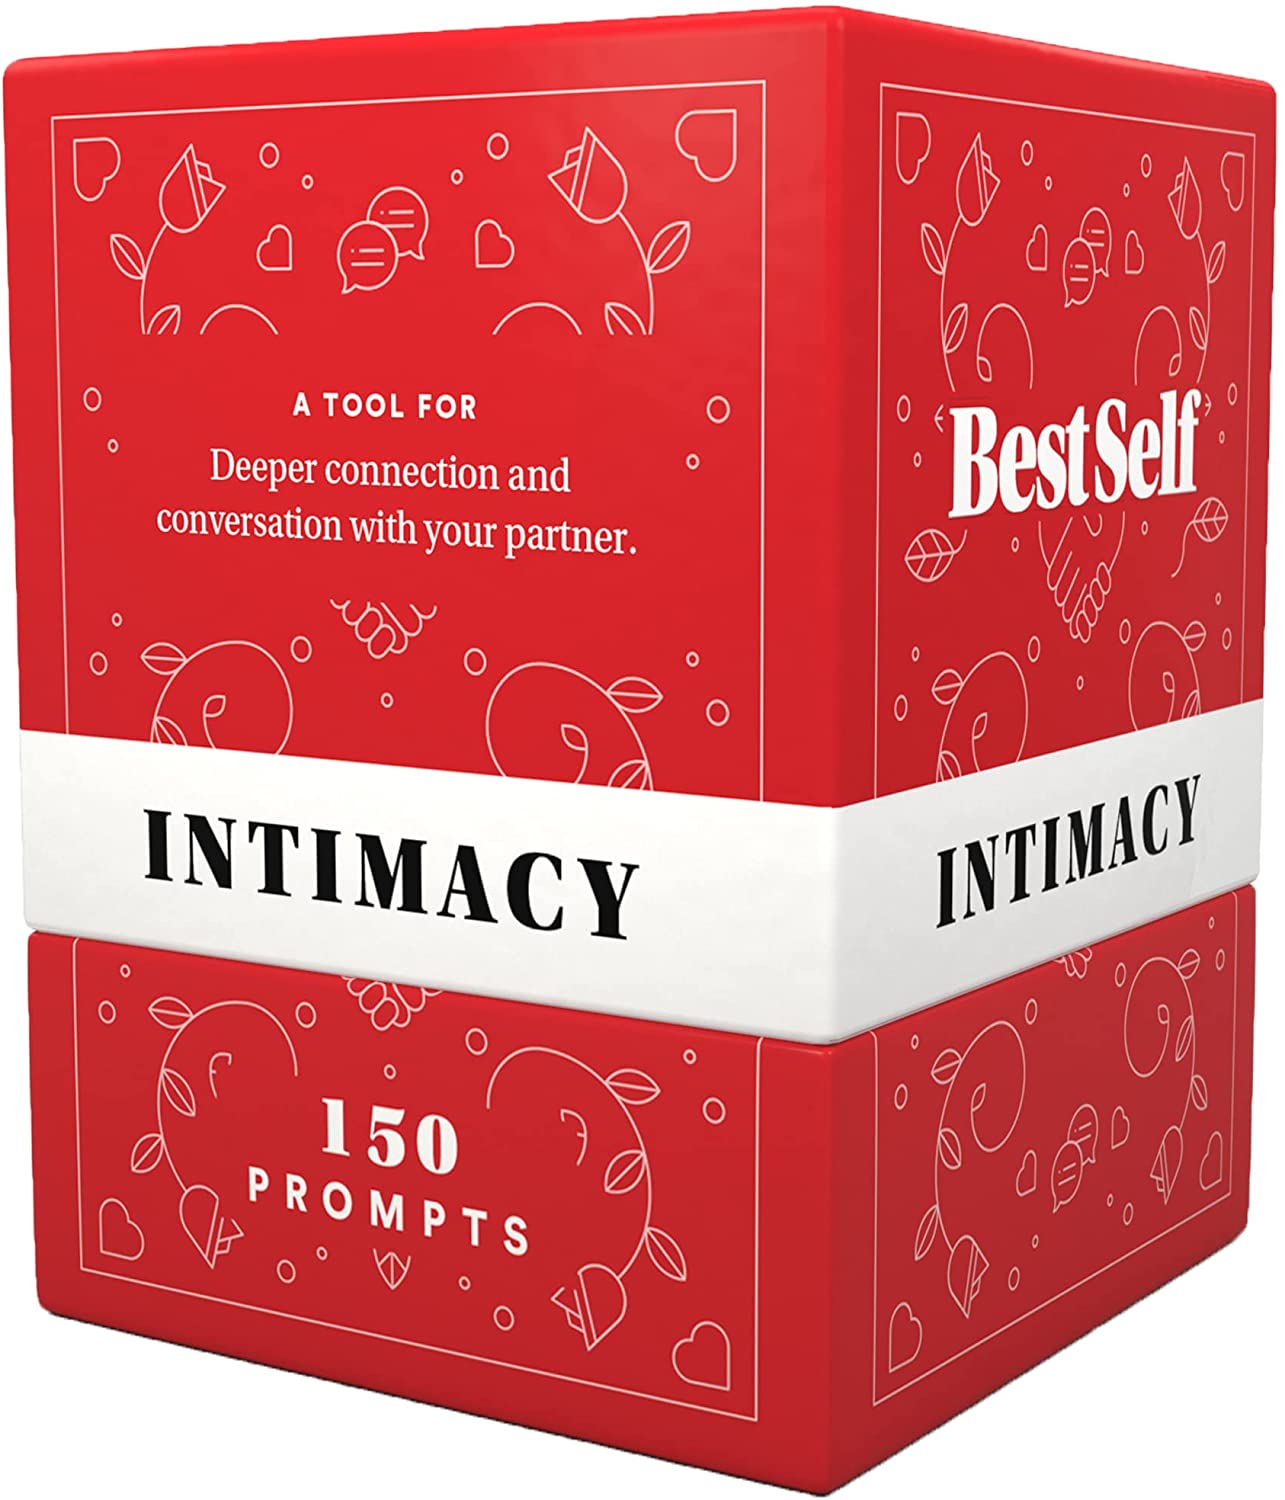 Intimacy Deck by BestSelf